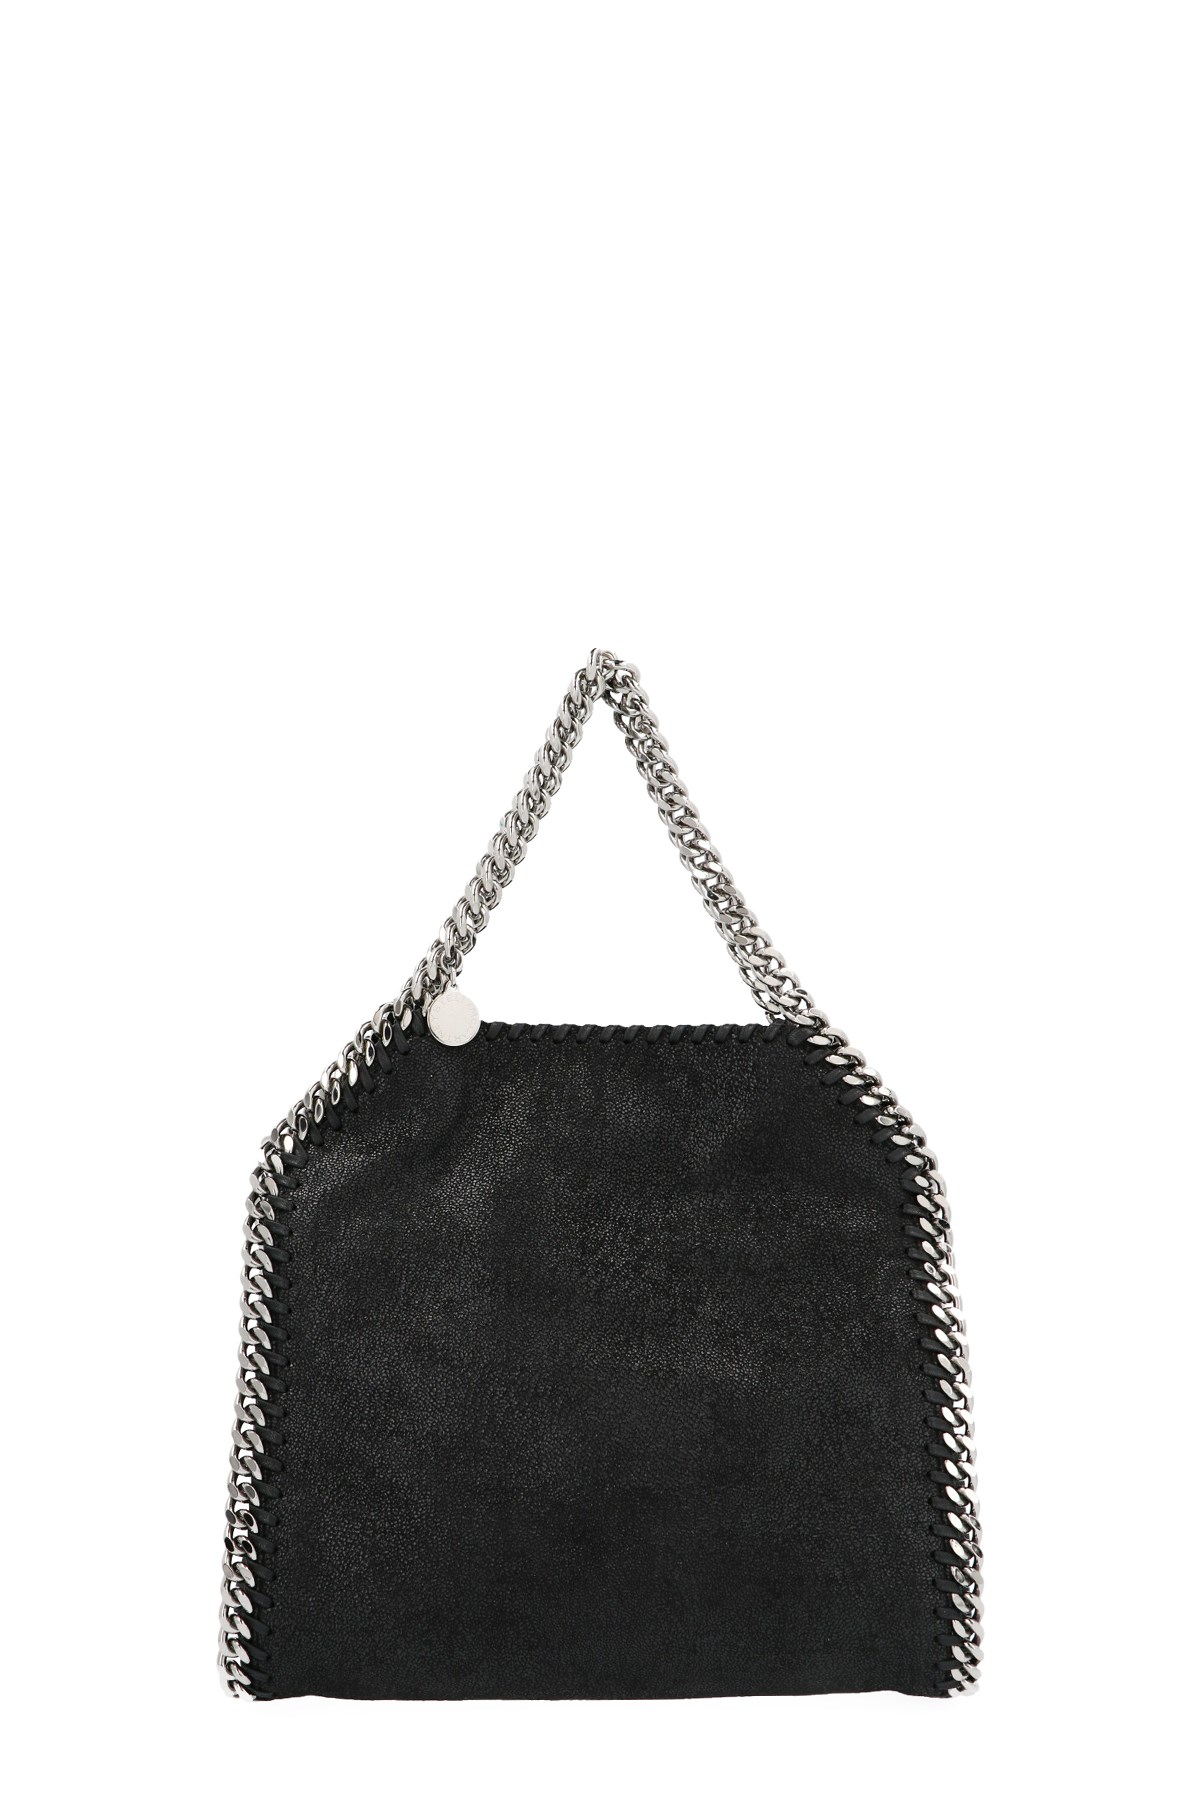 STELLA MCCARTNEY 'Falabella' Mini Handbag